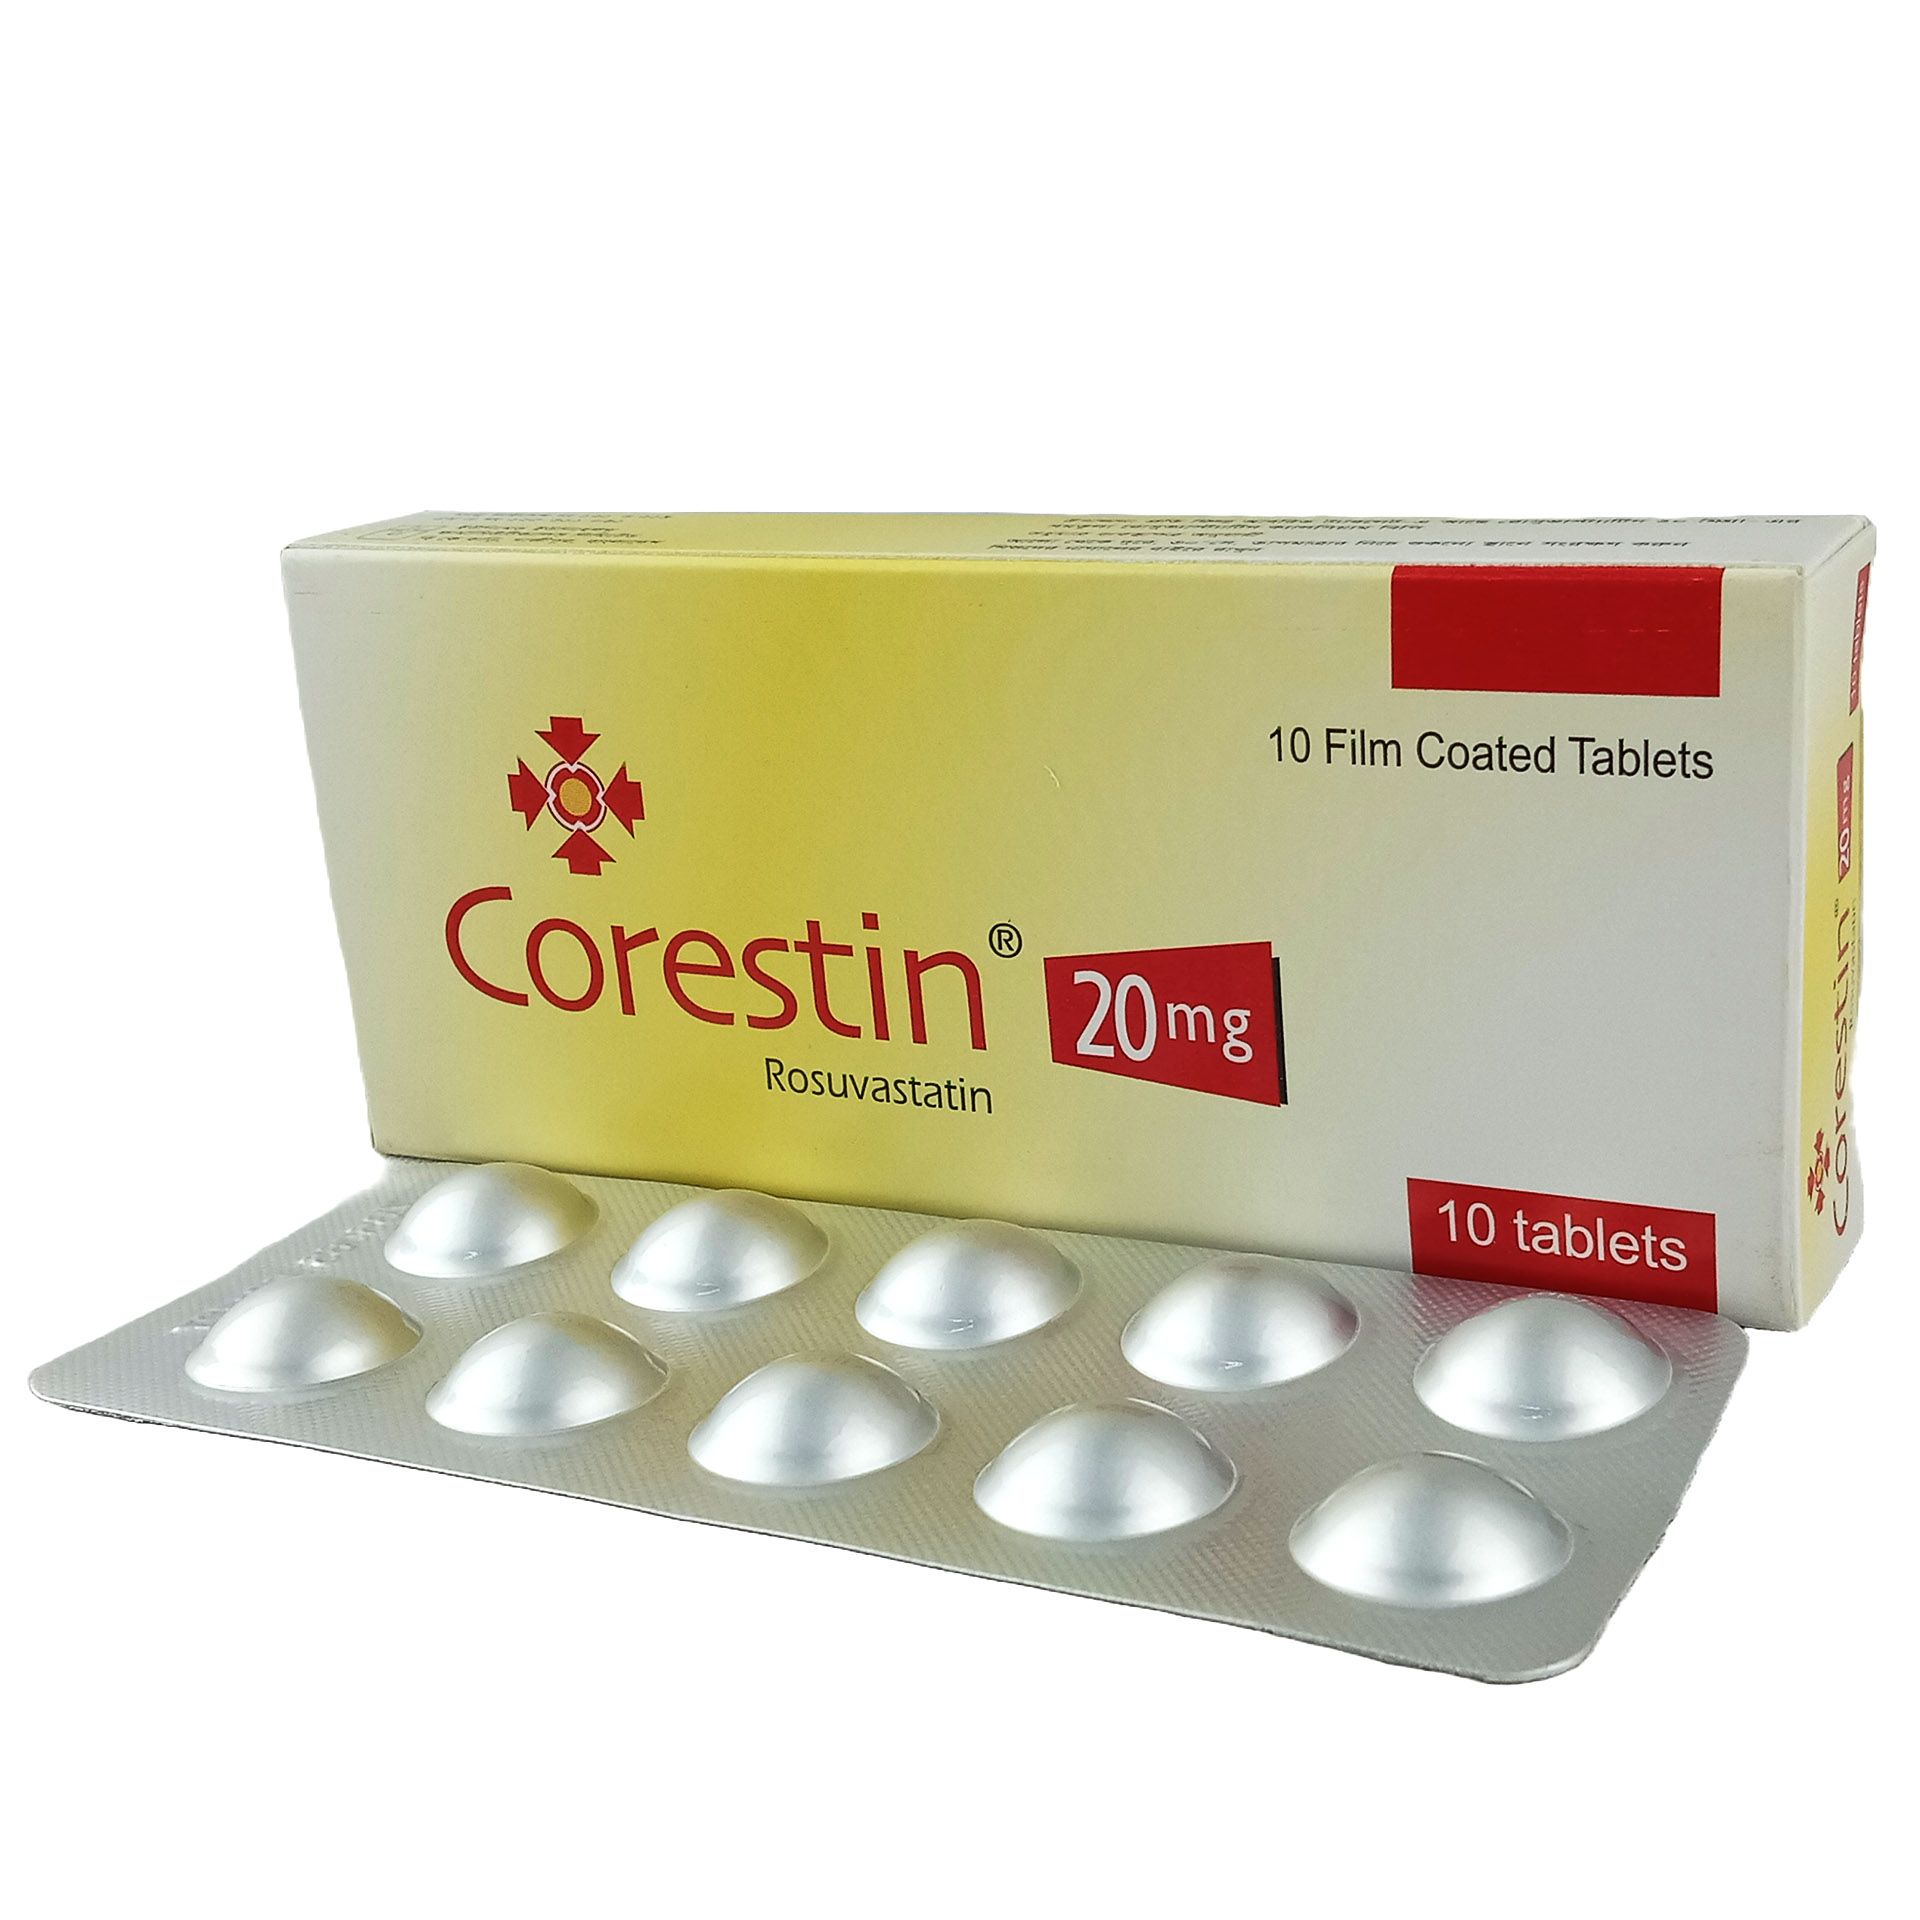 Corestin 20mg Tablet